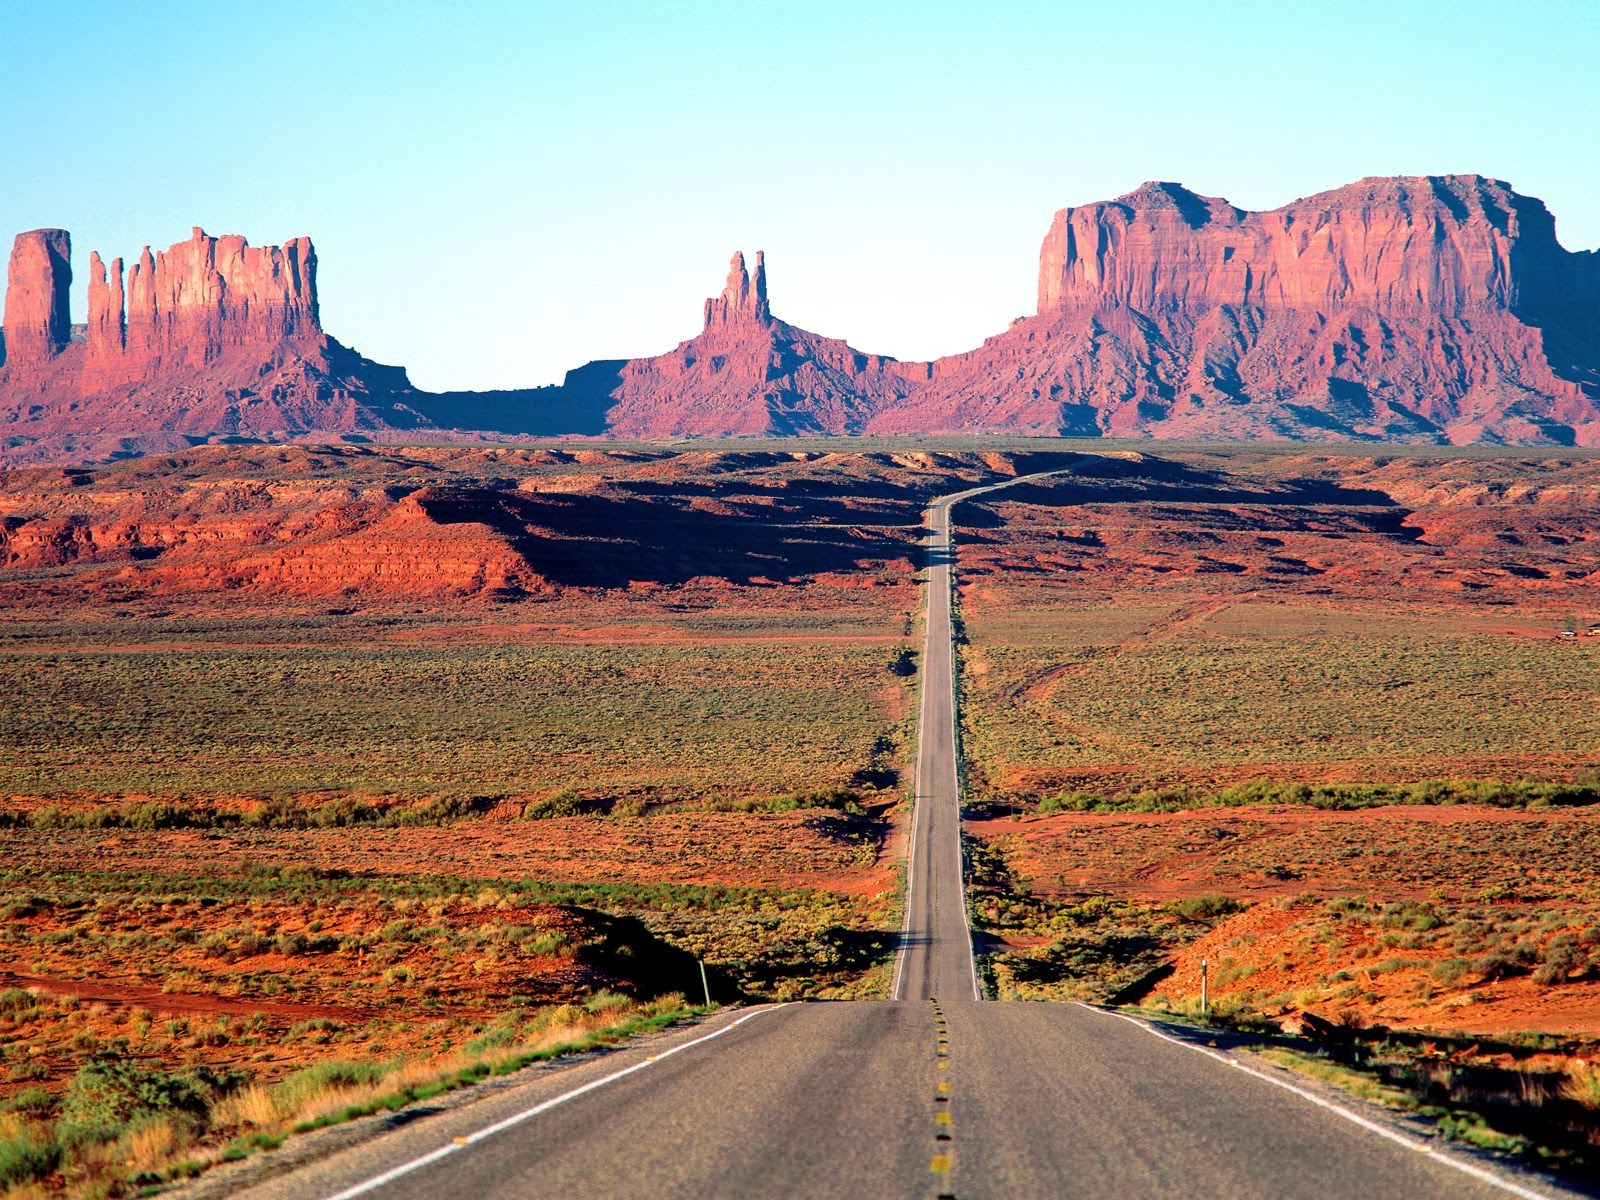 Beauty of Arizona, United States | Best Wallpaper Views